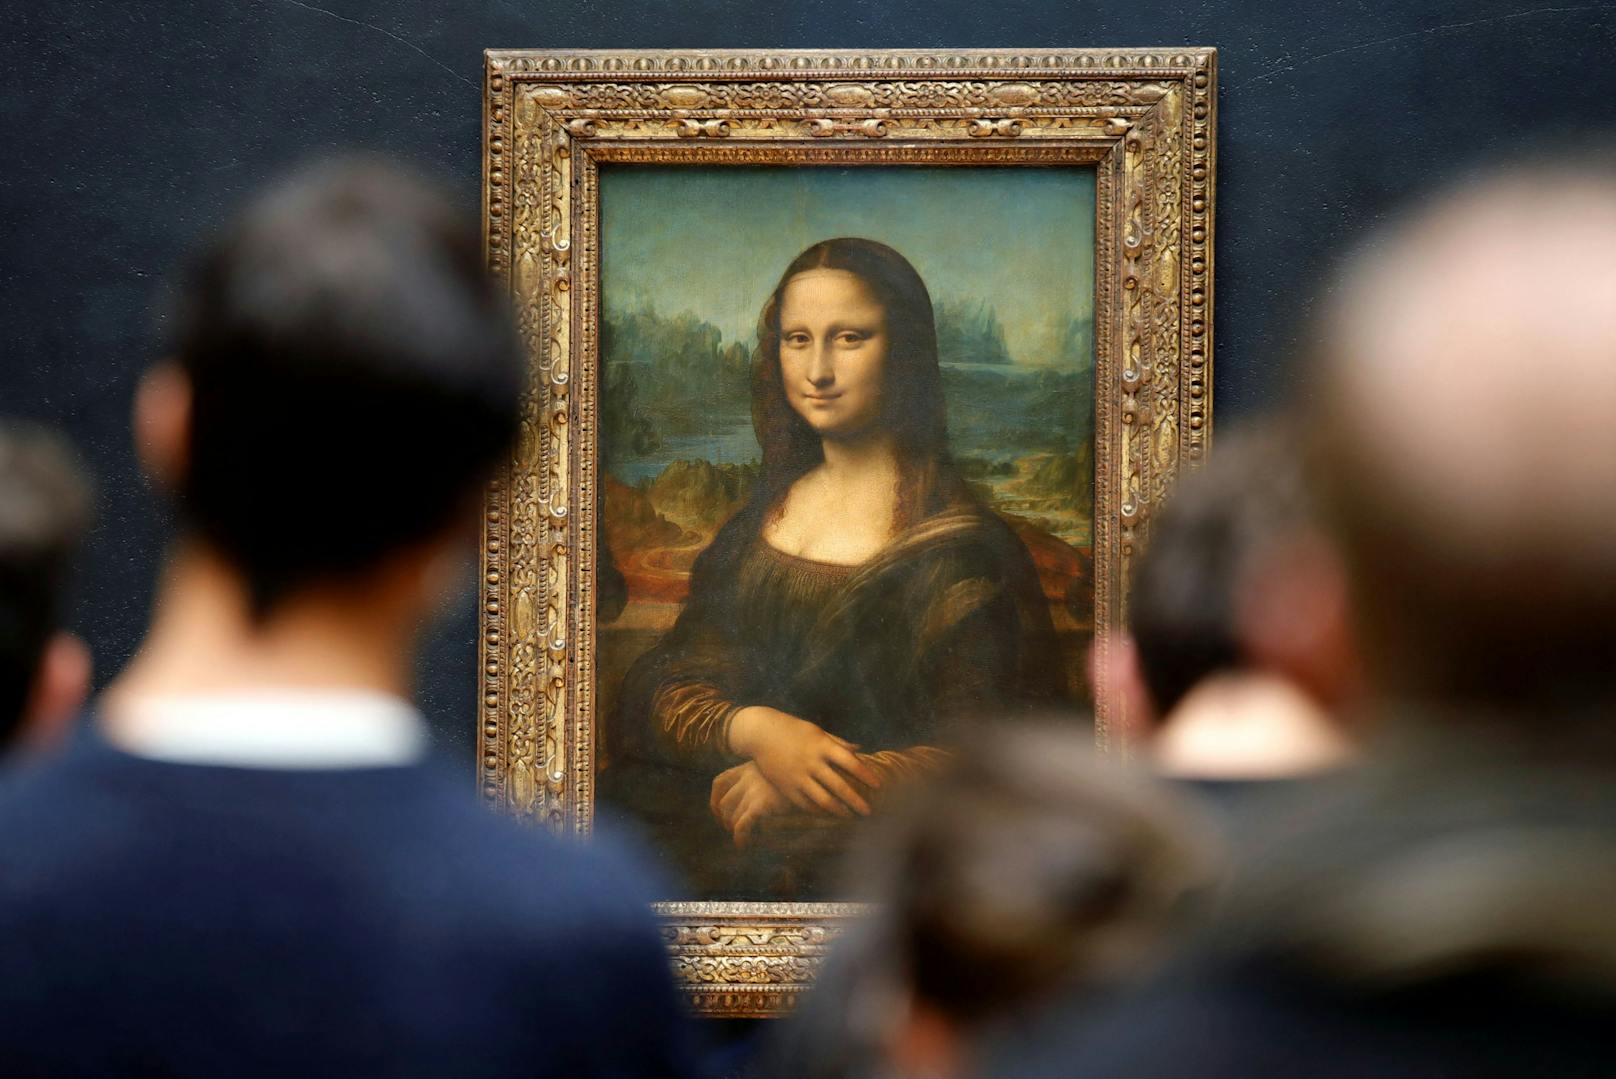 Rätsel um weltberühmte "Mona Lisa" gelöst – Dorf jubelt